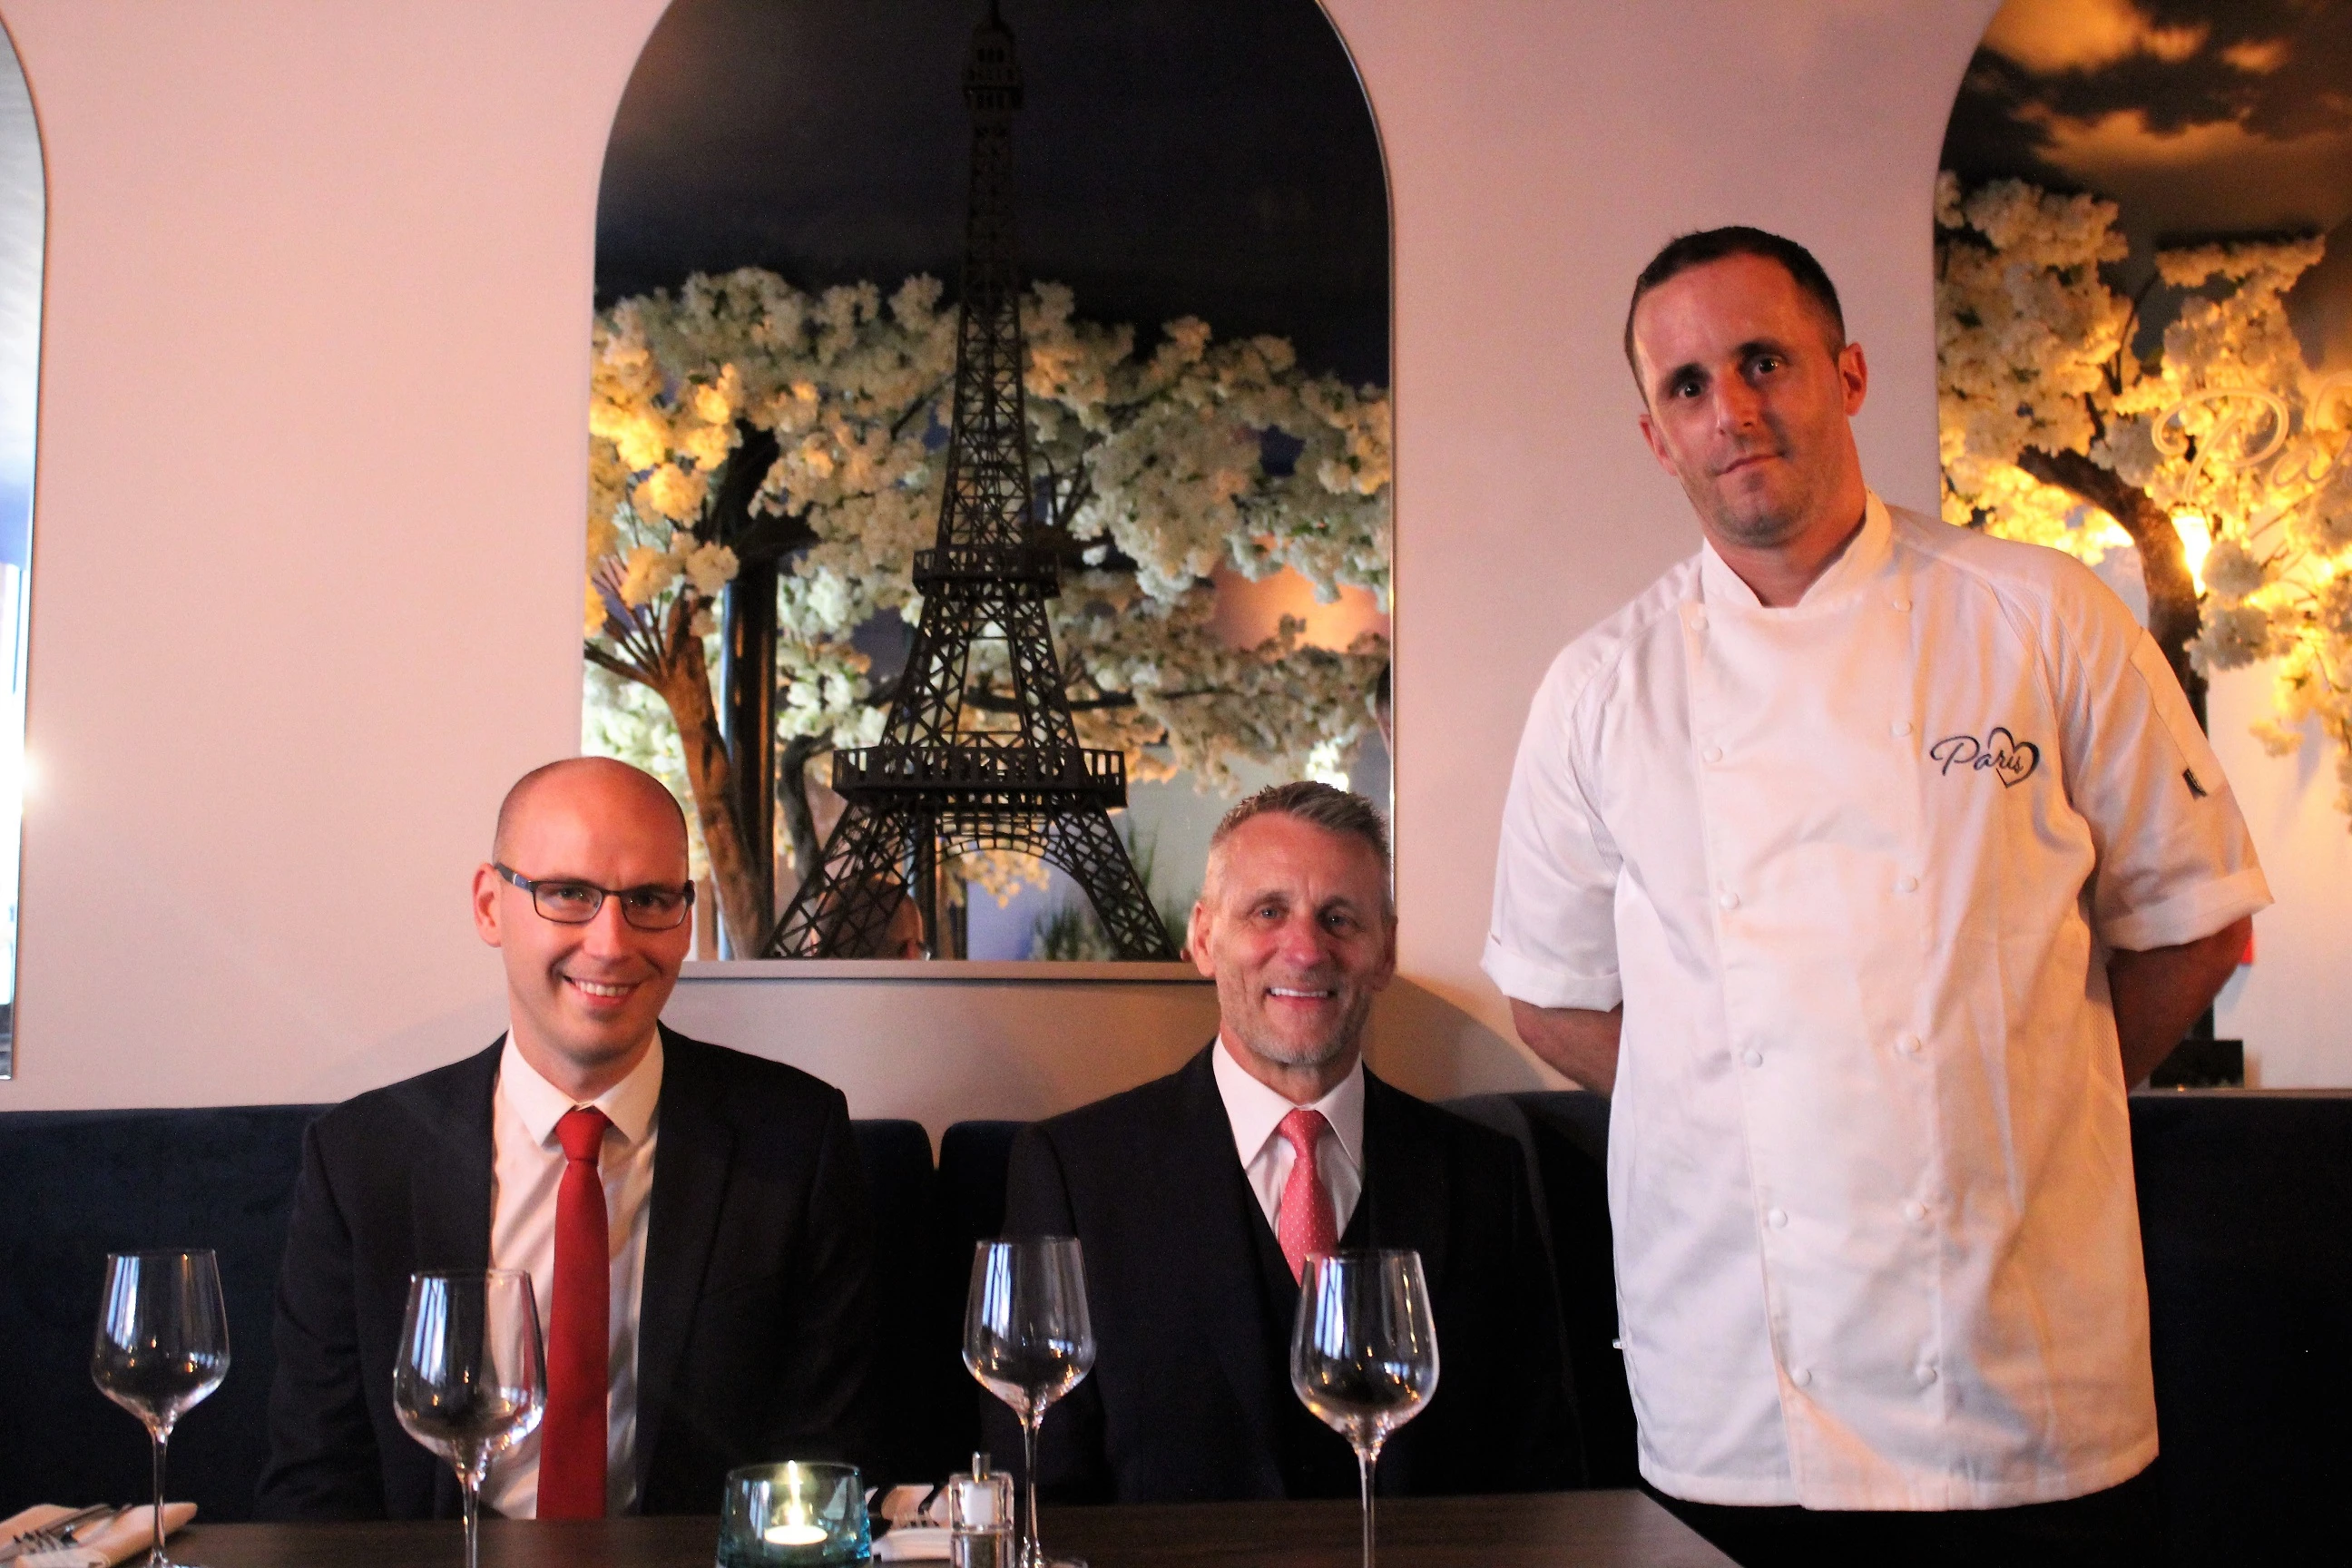 LtoR Fraser Brown Commercial Property Associate Liam Wilkinson, Paris Owner Antony Crossman and Executive Head Chef James Crossman